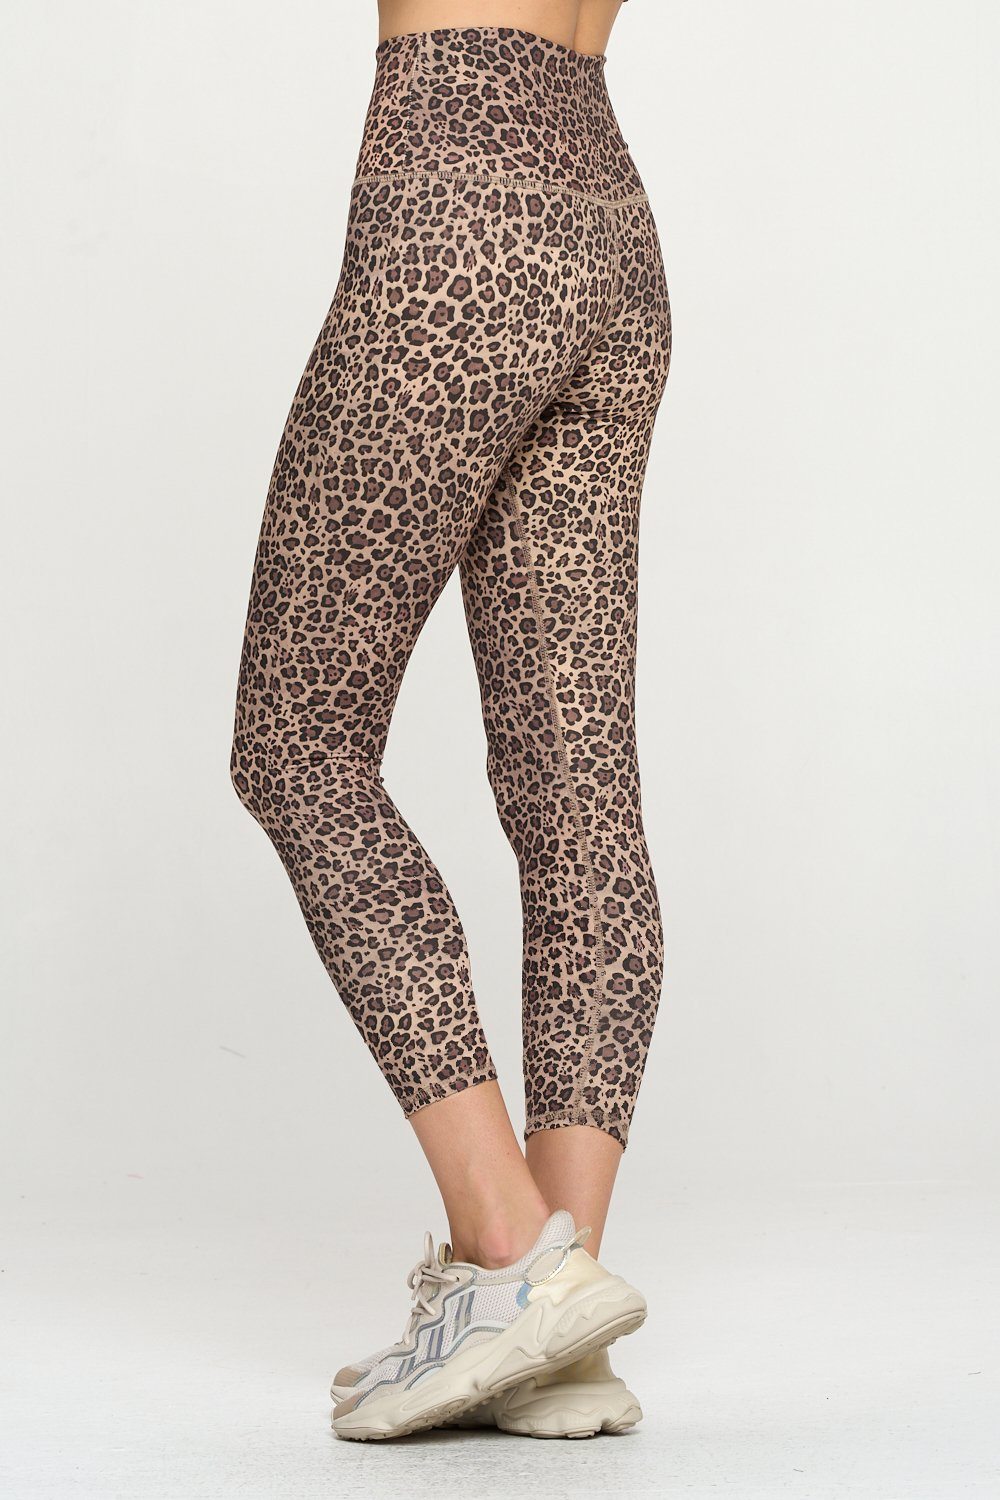 Mia - Golden Leopard 7/8 Legging (High-Waist)